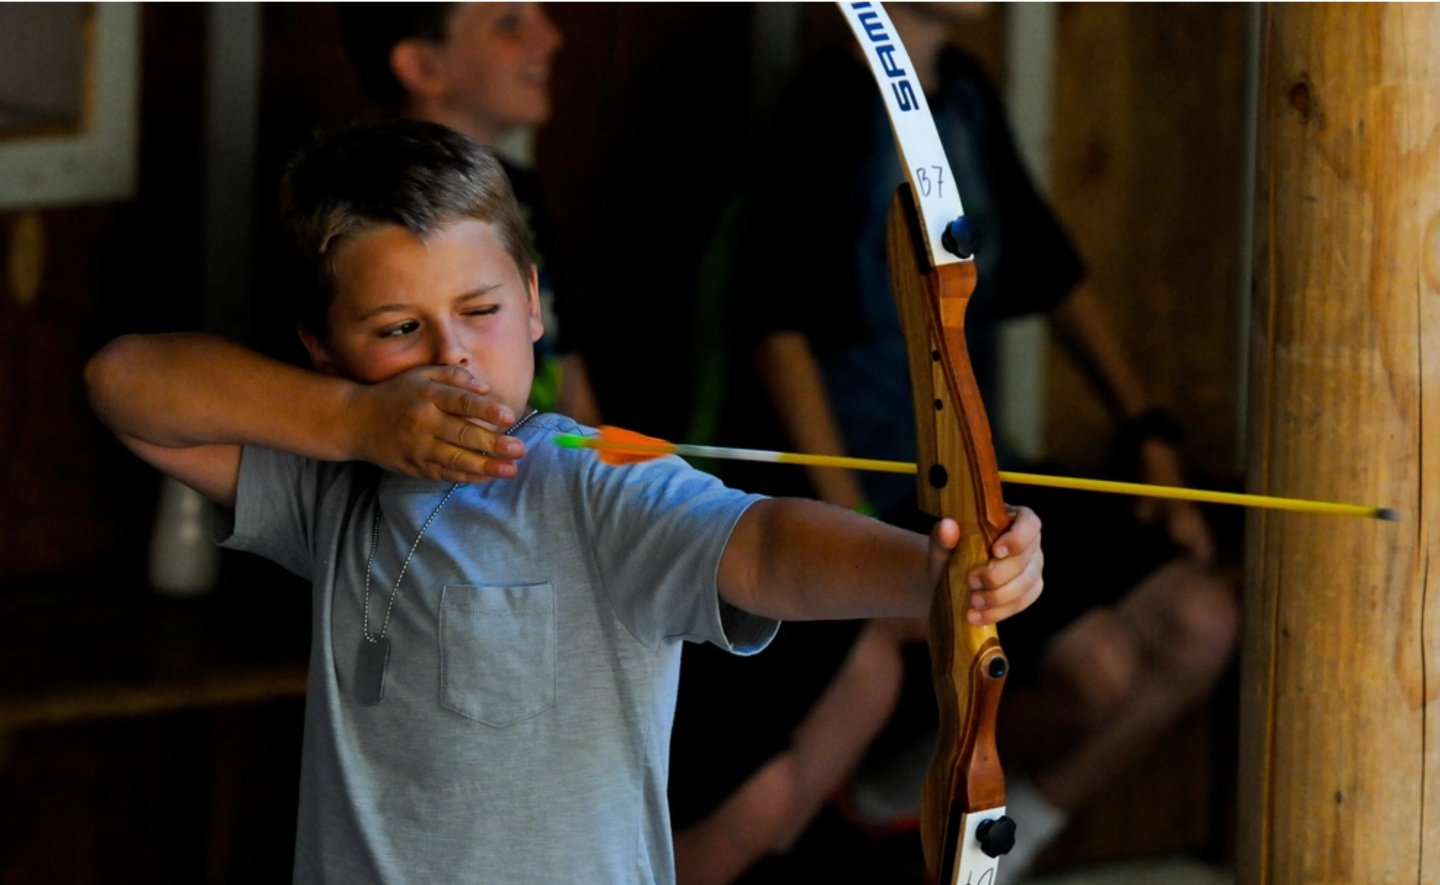 A boy aims a bow and arrow at summer camp